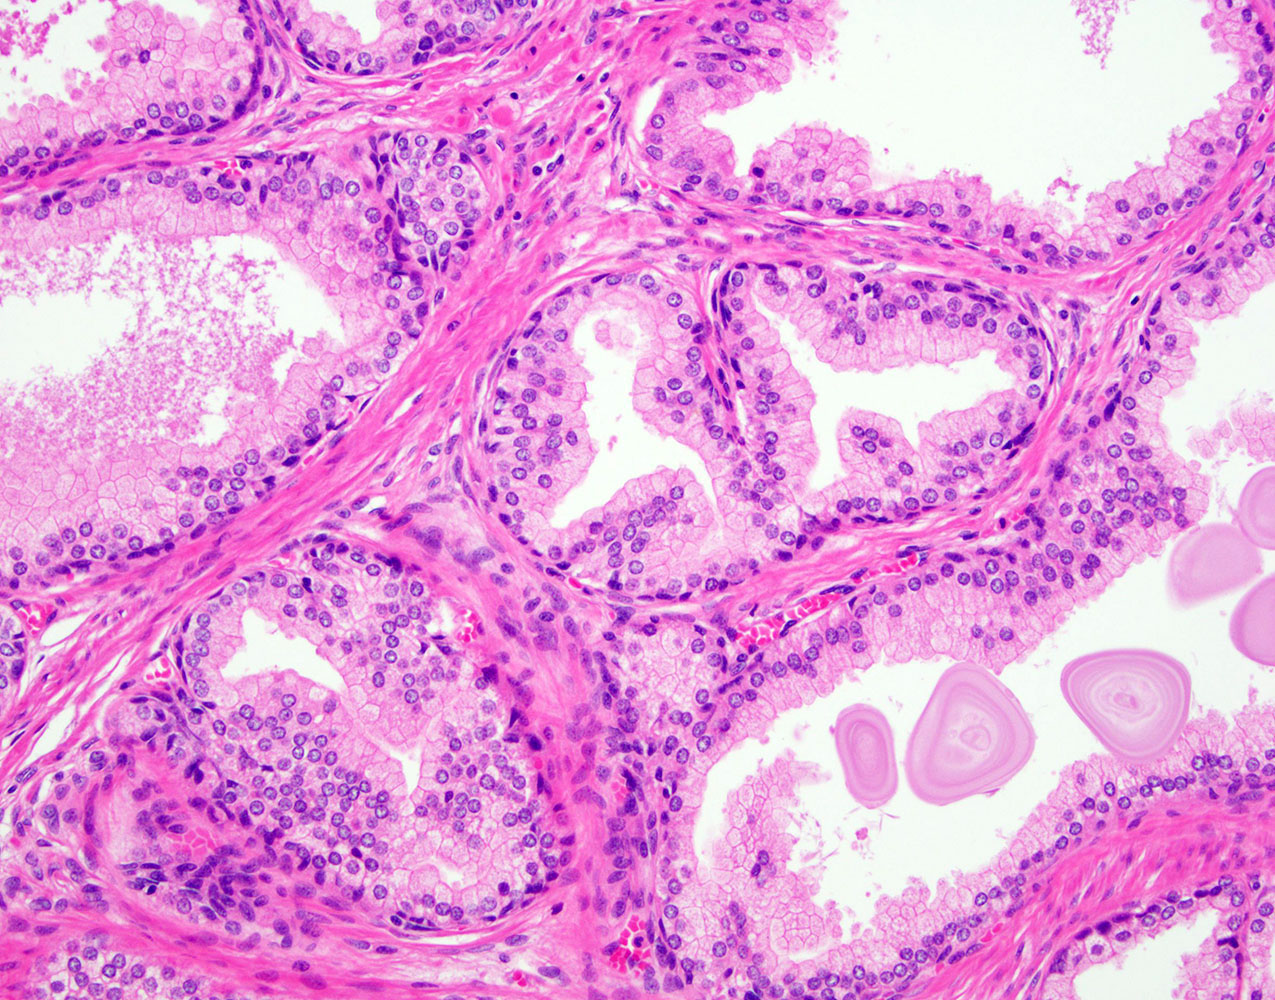 prostate histology pathology outlines